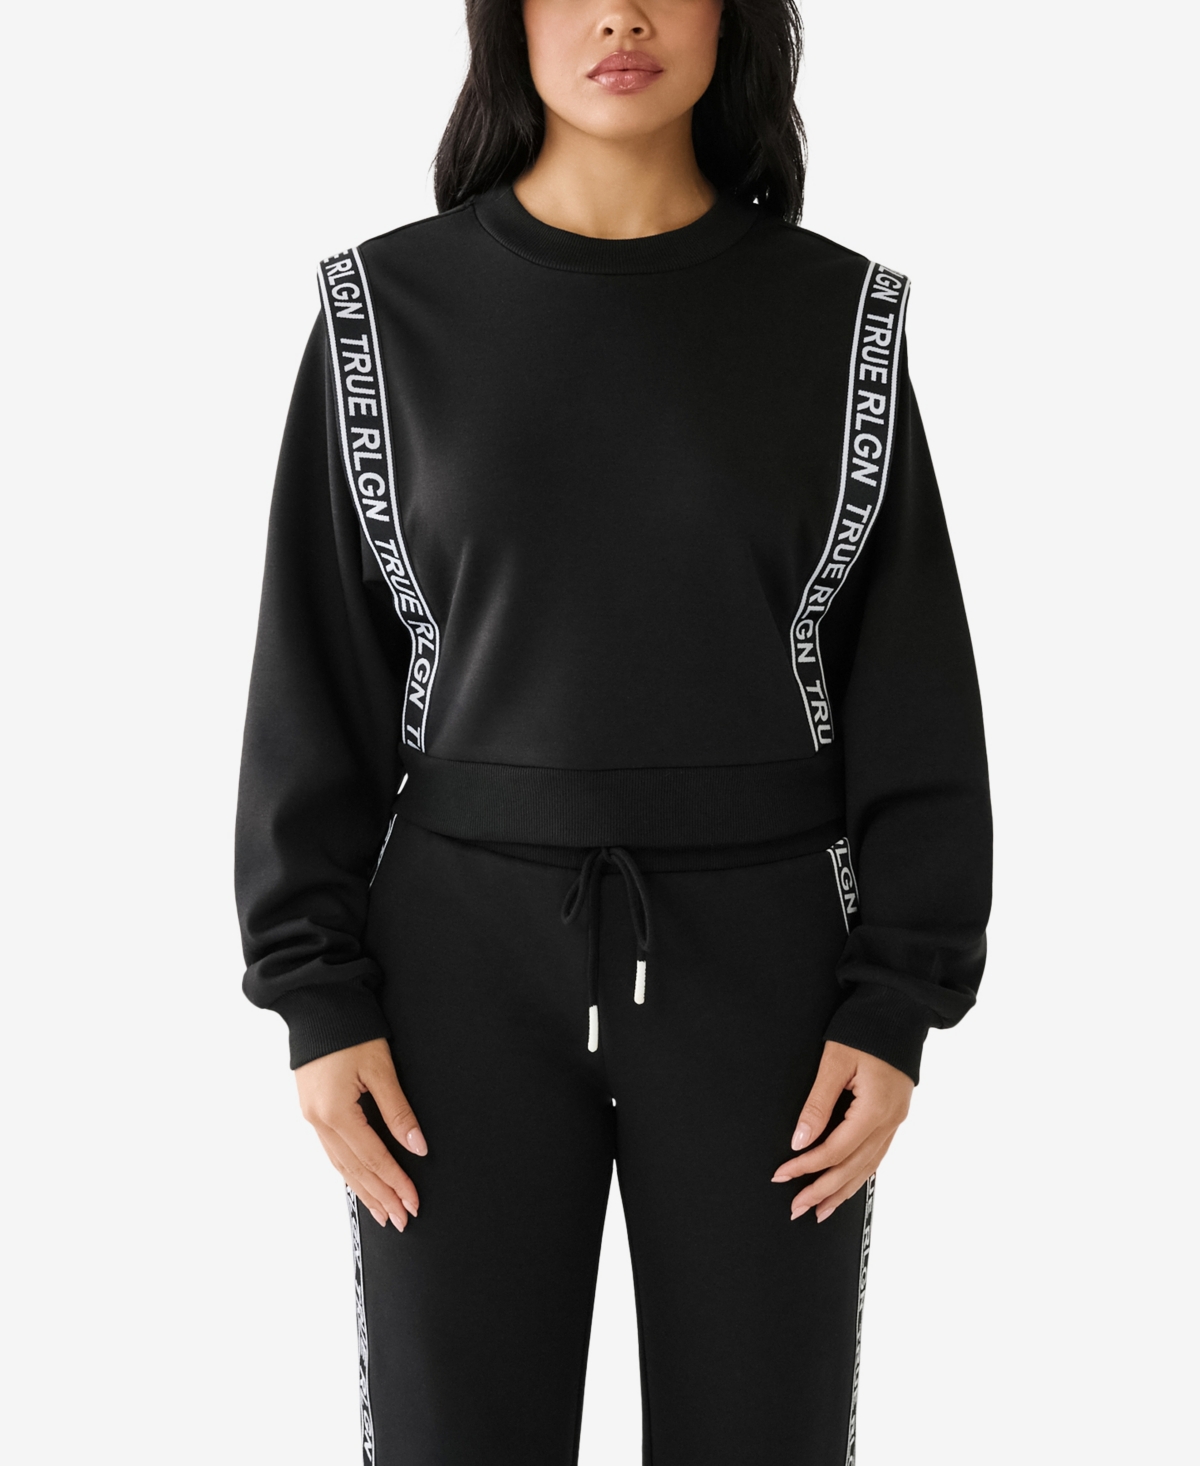 Women's Taping Popover Sweatshirt - Jet Black